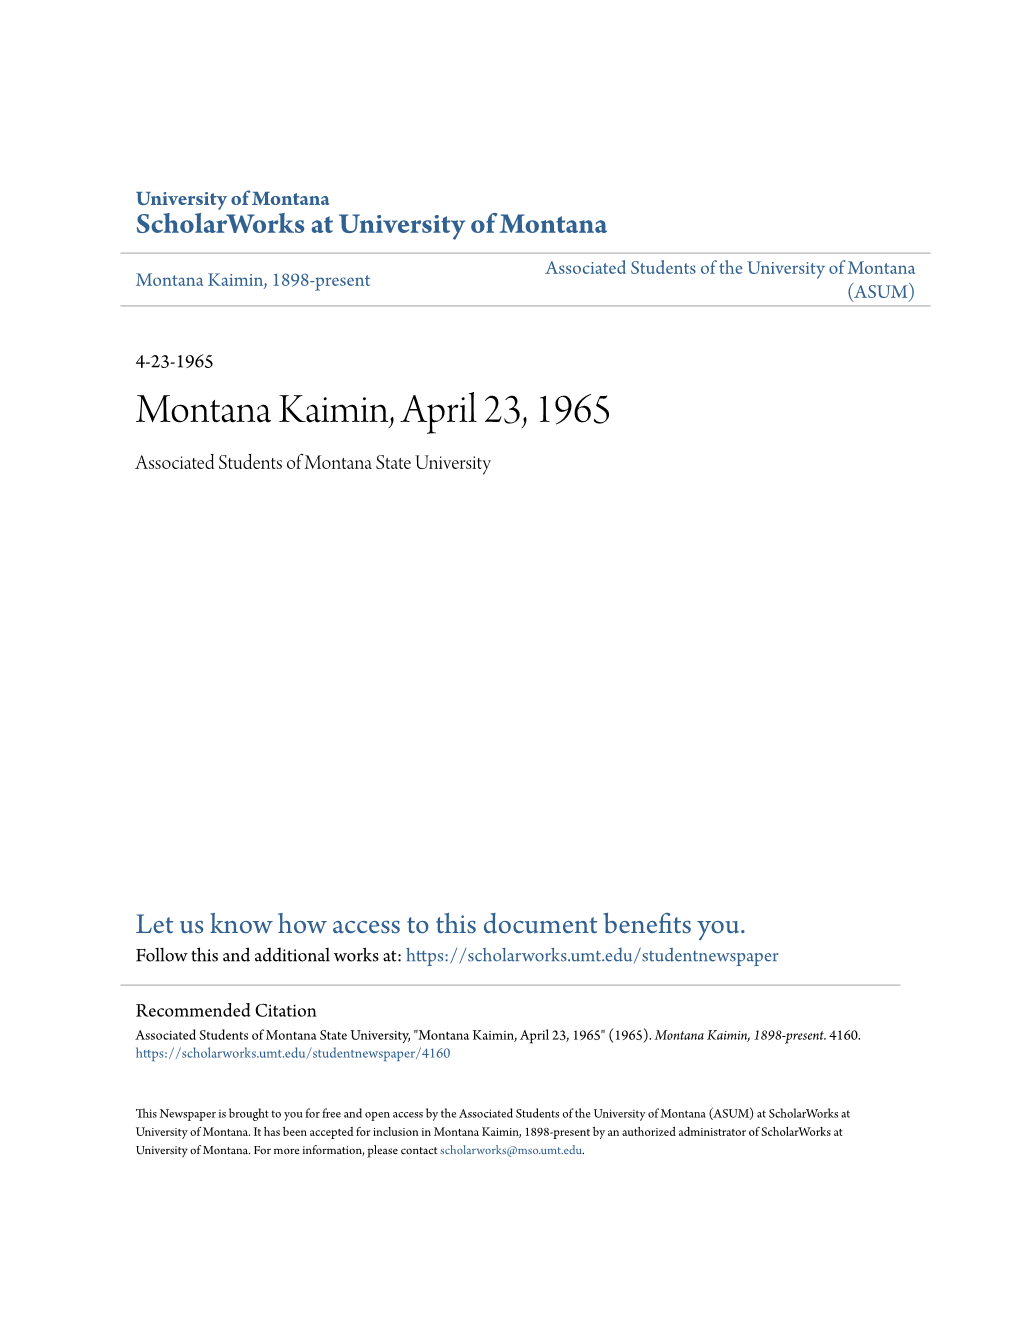 Montana Kaimin, April 23, 1965 Associated Students of Montana State University